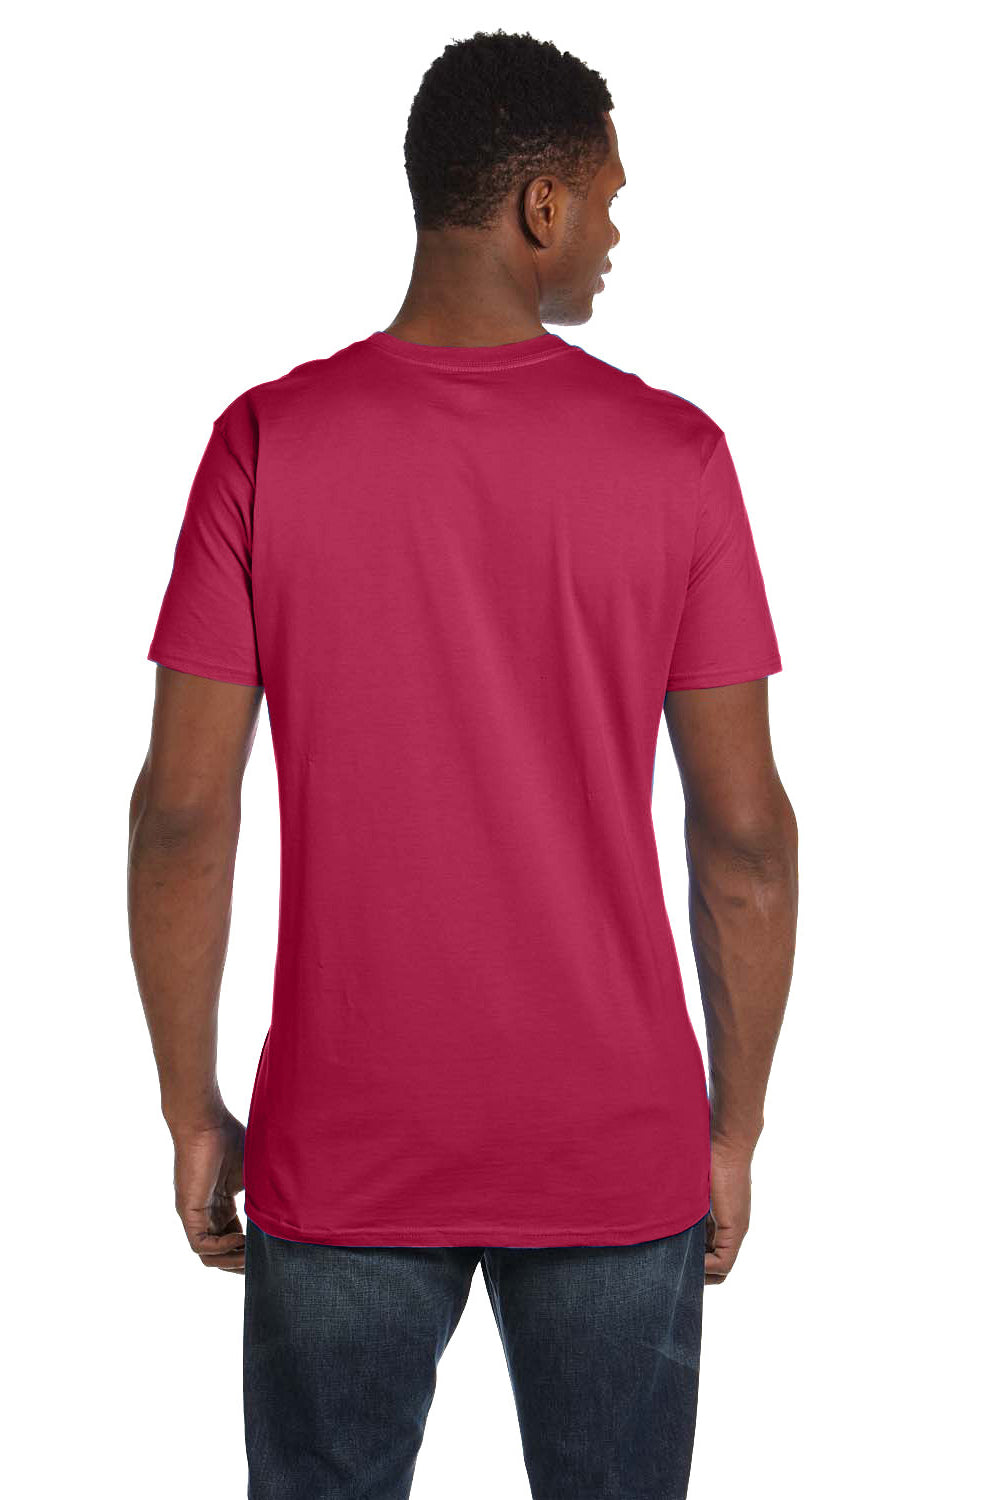 Hanes 4980 Mens Nano-T Short Sleeve Crewneck T-Shirt Heather Red Back